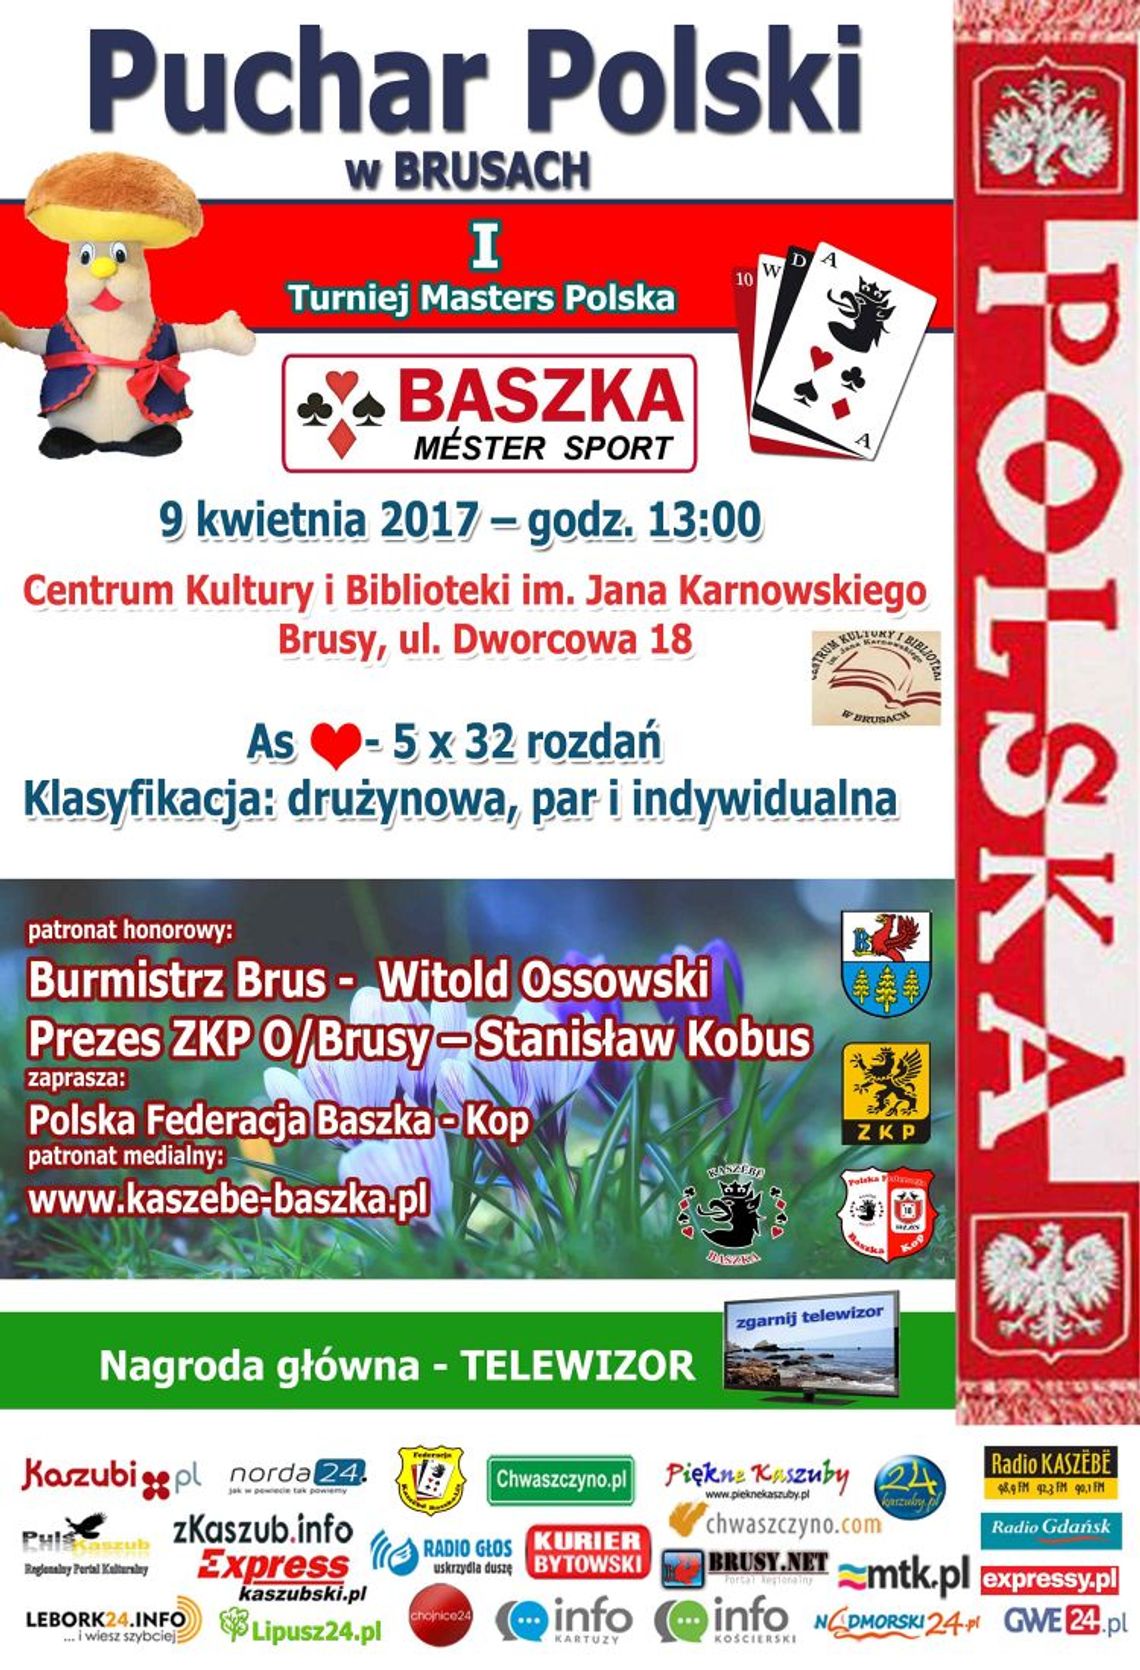 Puchar Polski – Masters Polska 2017 w Brusach